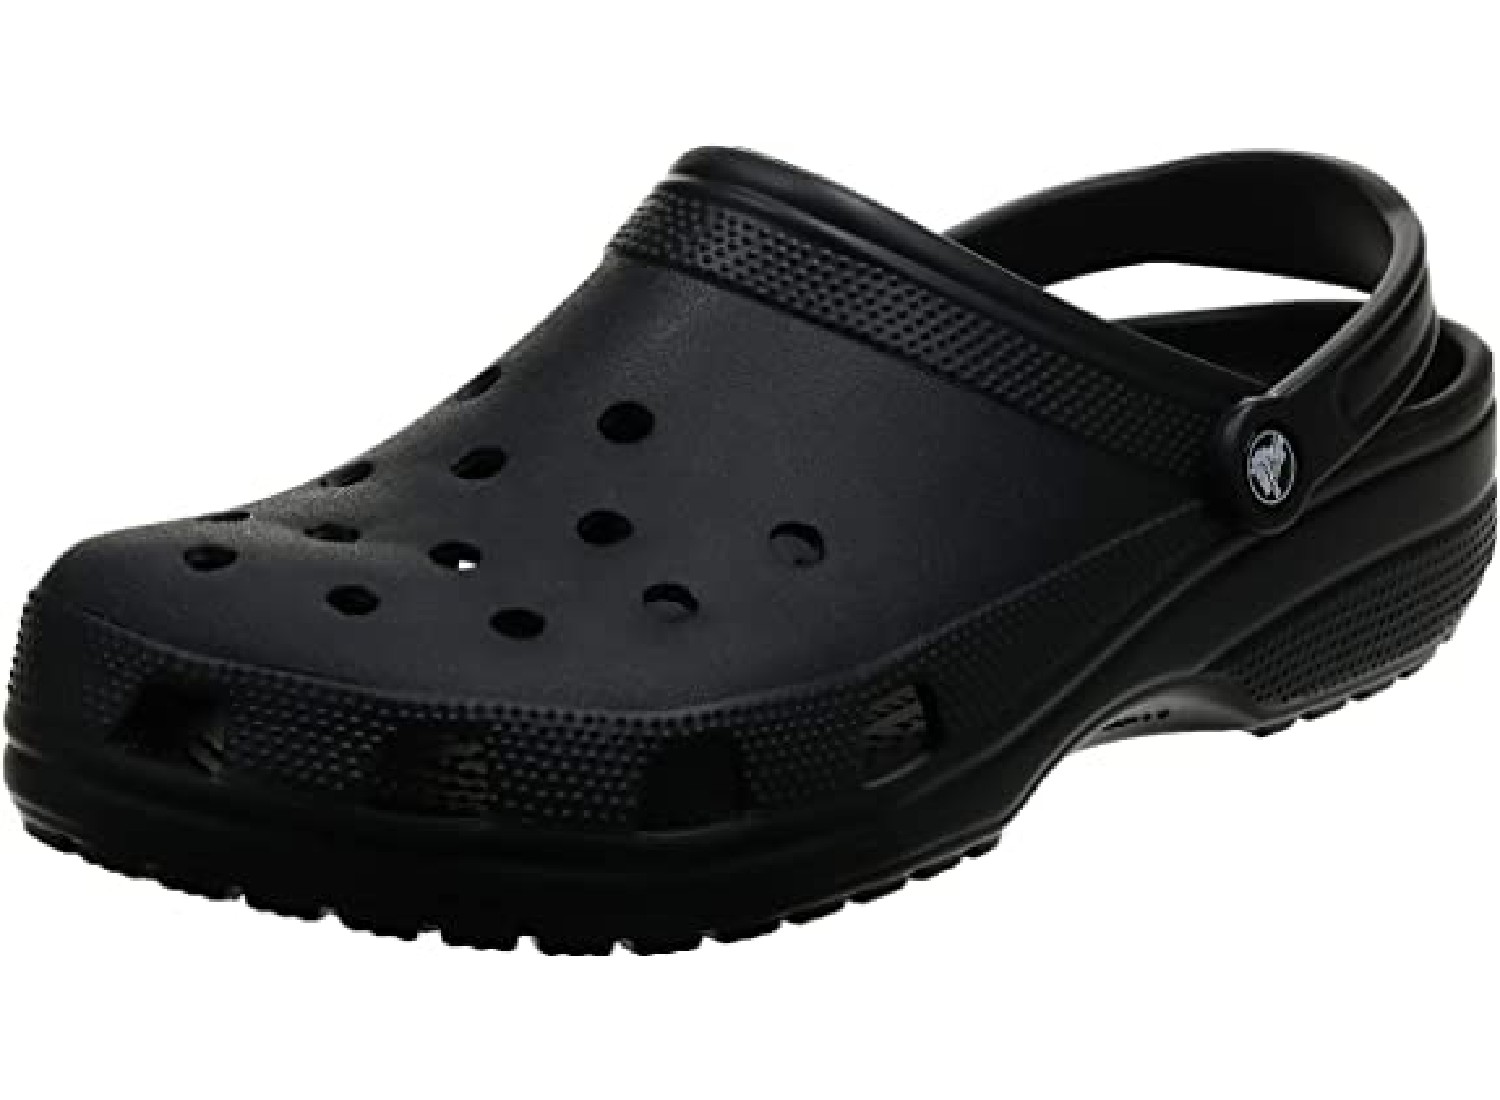 Black croc clog.